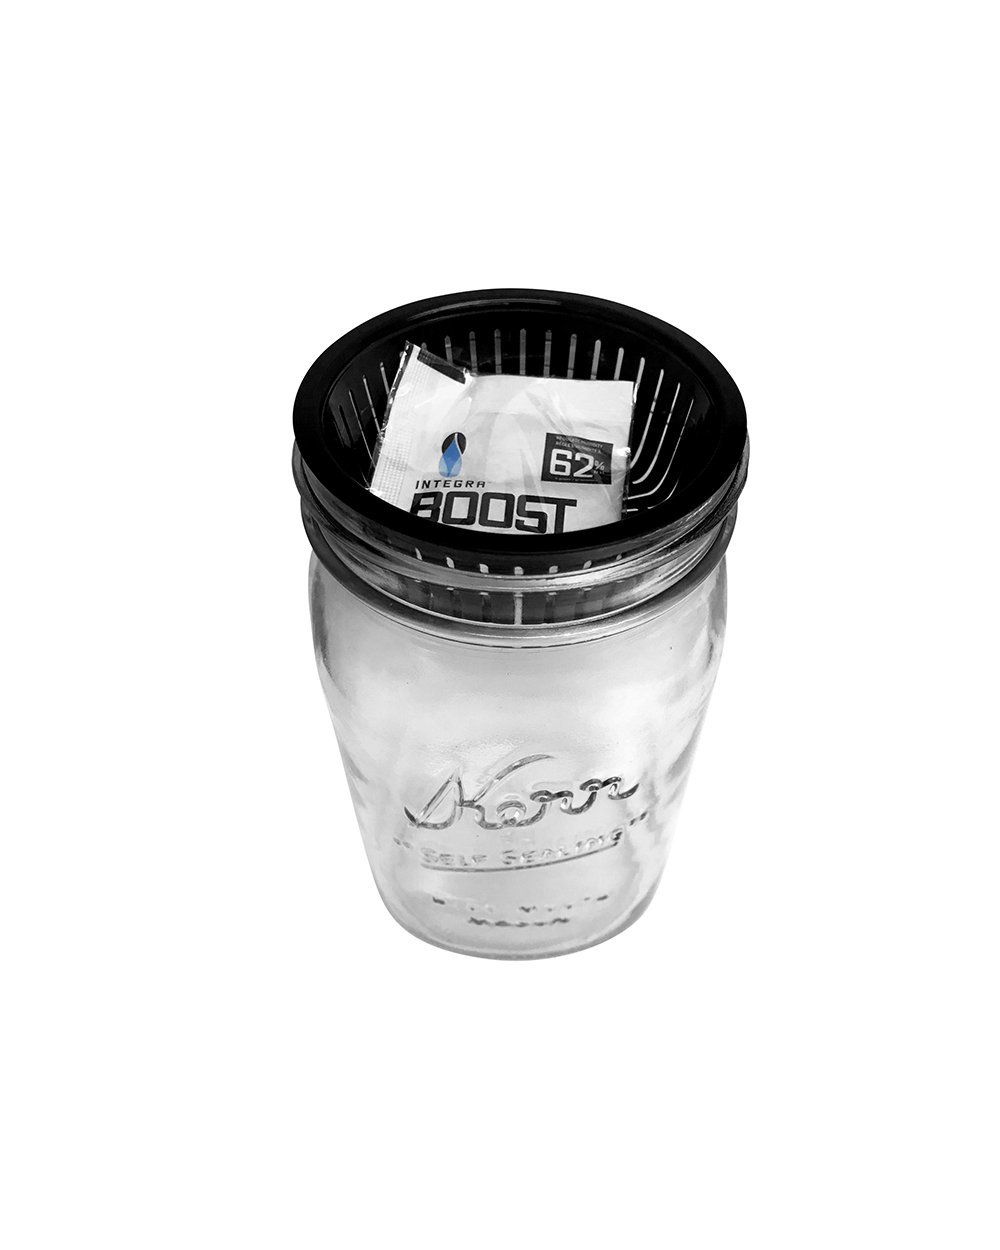 KERR | Humidity Control Clear Glass Jar w/ Pods | 32oz - 62% - 6 Packs - 3